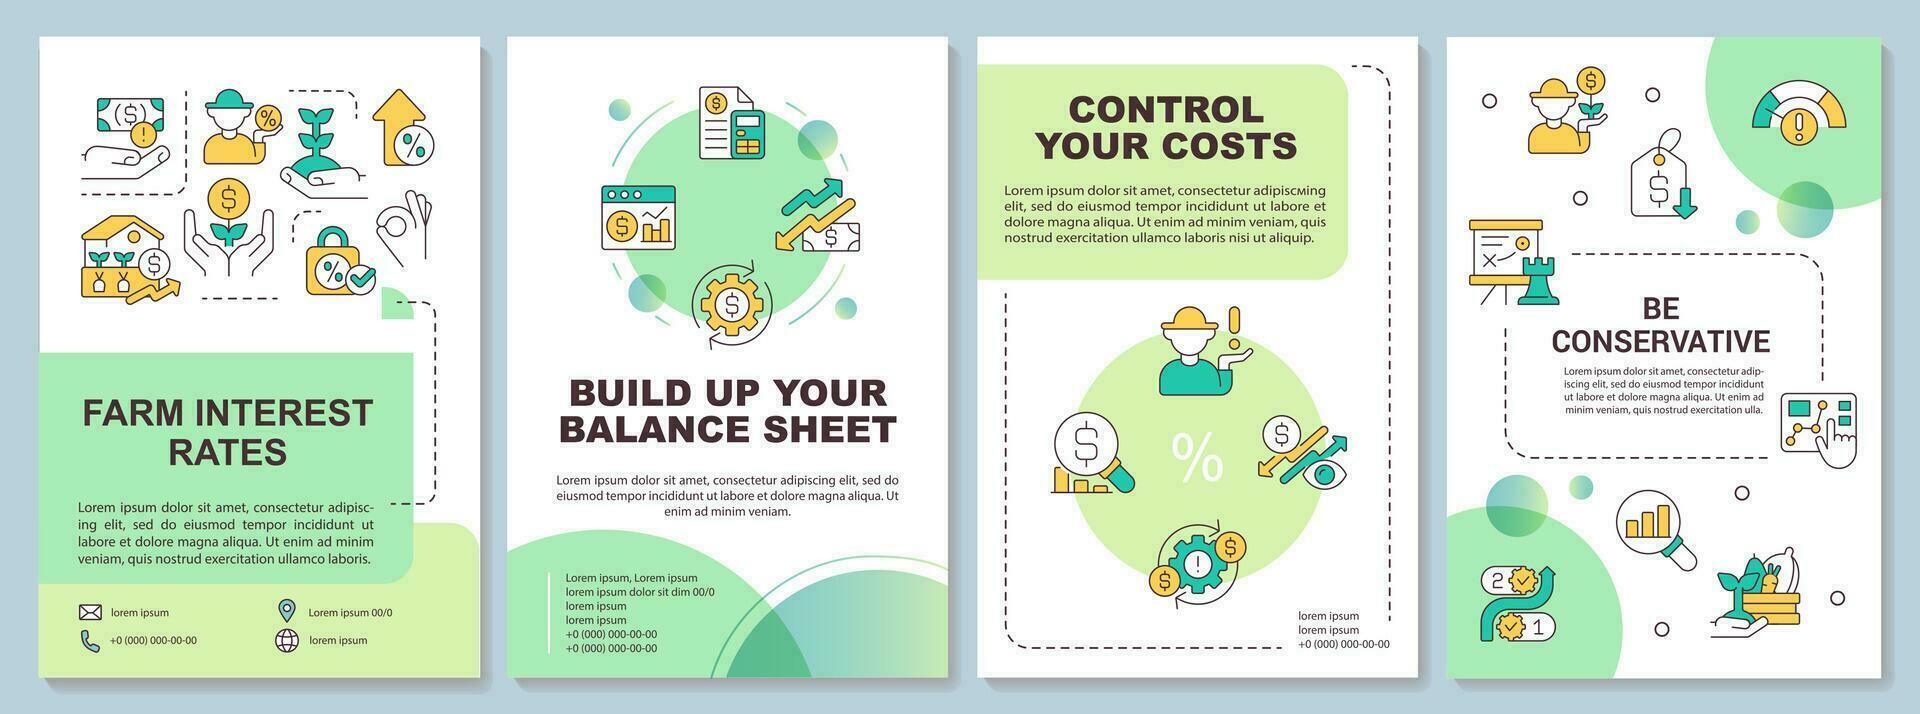 granja negocio estrategia verde folleto modelo. agroindustria folleto diseño con lineal iconos editable 4 4 vector diseños para presentación, anual informes